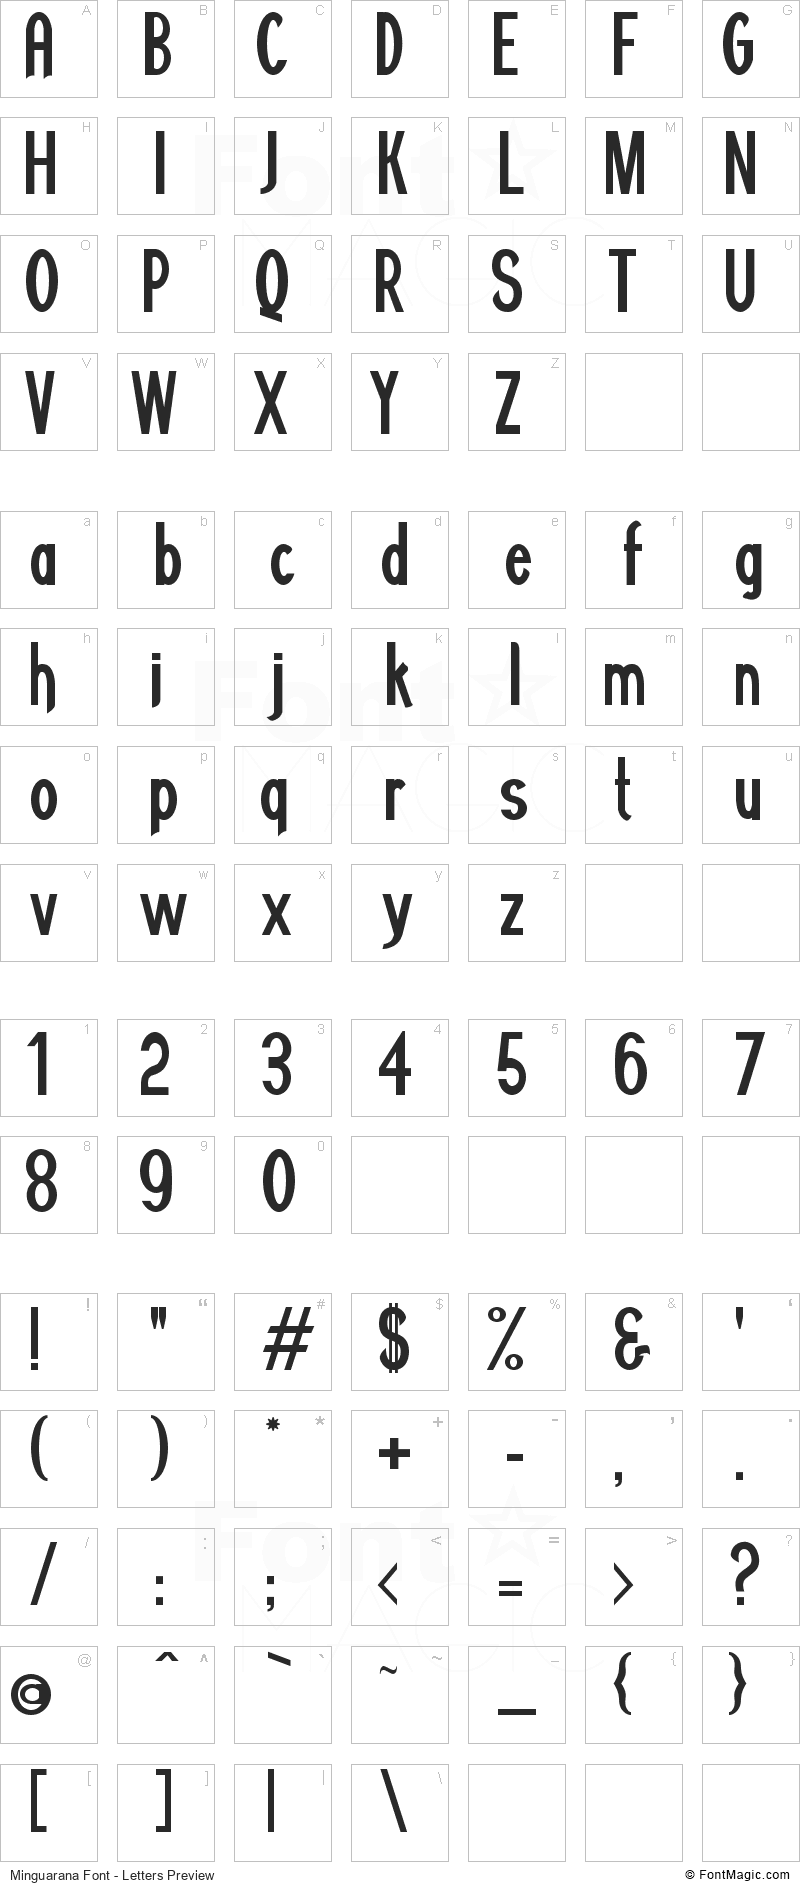 Minguarana Font - All Latters Preview Chart